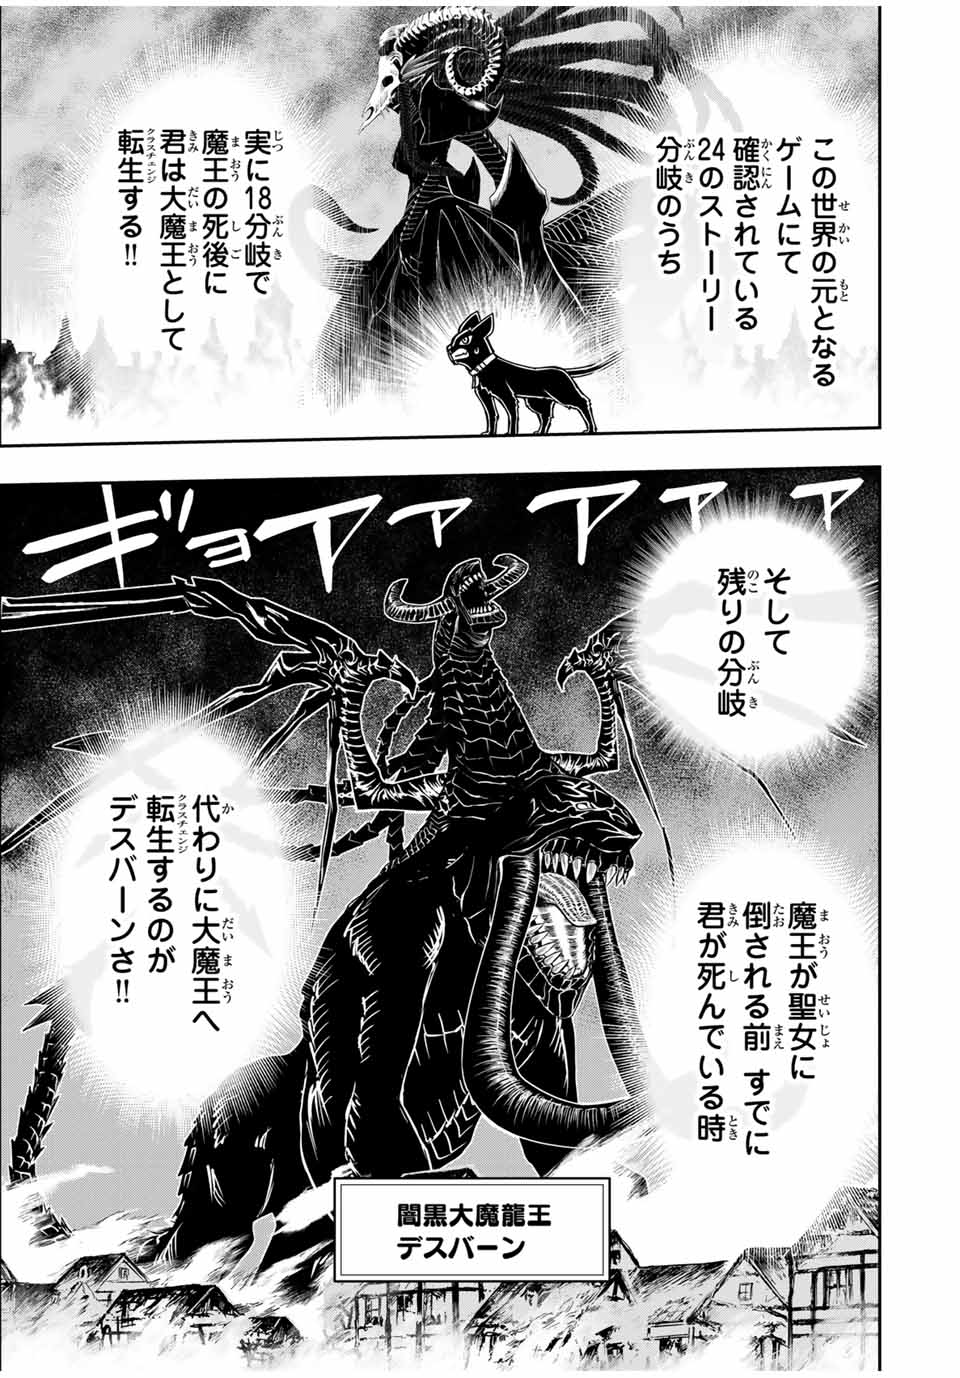 Nengan no Akuyaku Reijou (Last Boss) no Karada wo Teniiretazo!  - Chapter 21 - Page 3